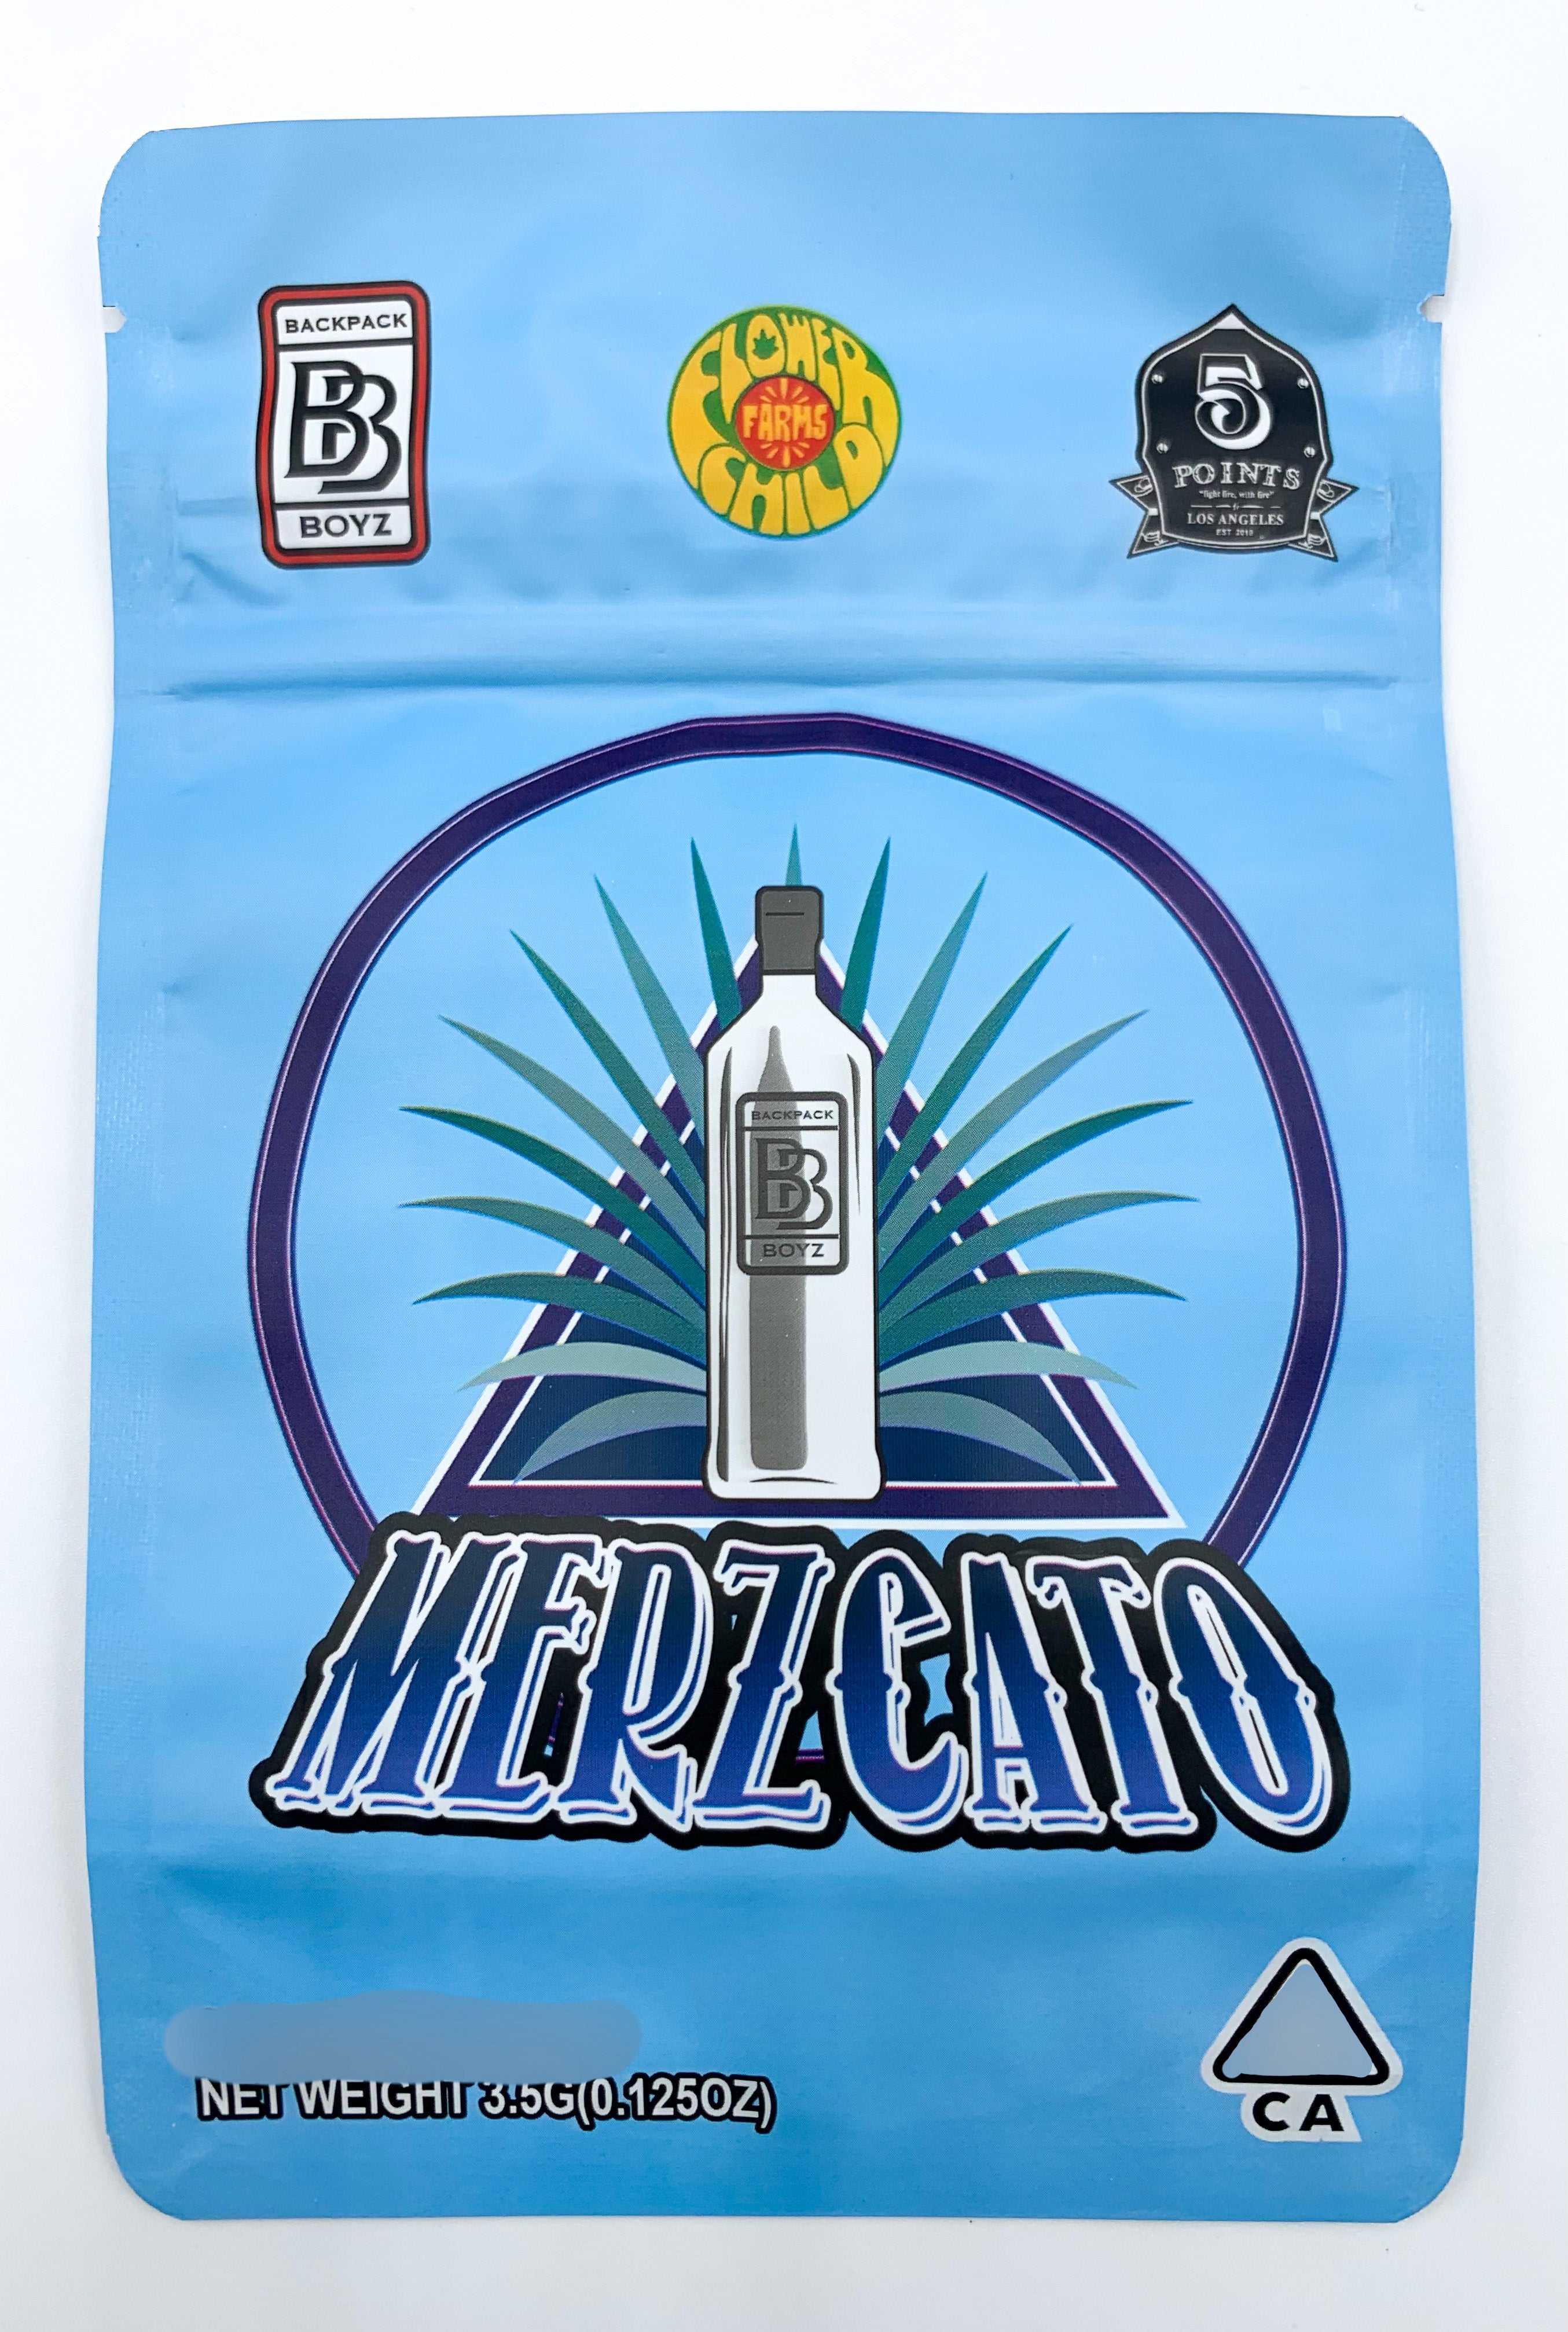 Backpack Boyz Merzcato 3.5G Mylar bags